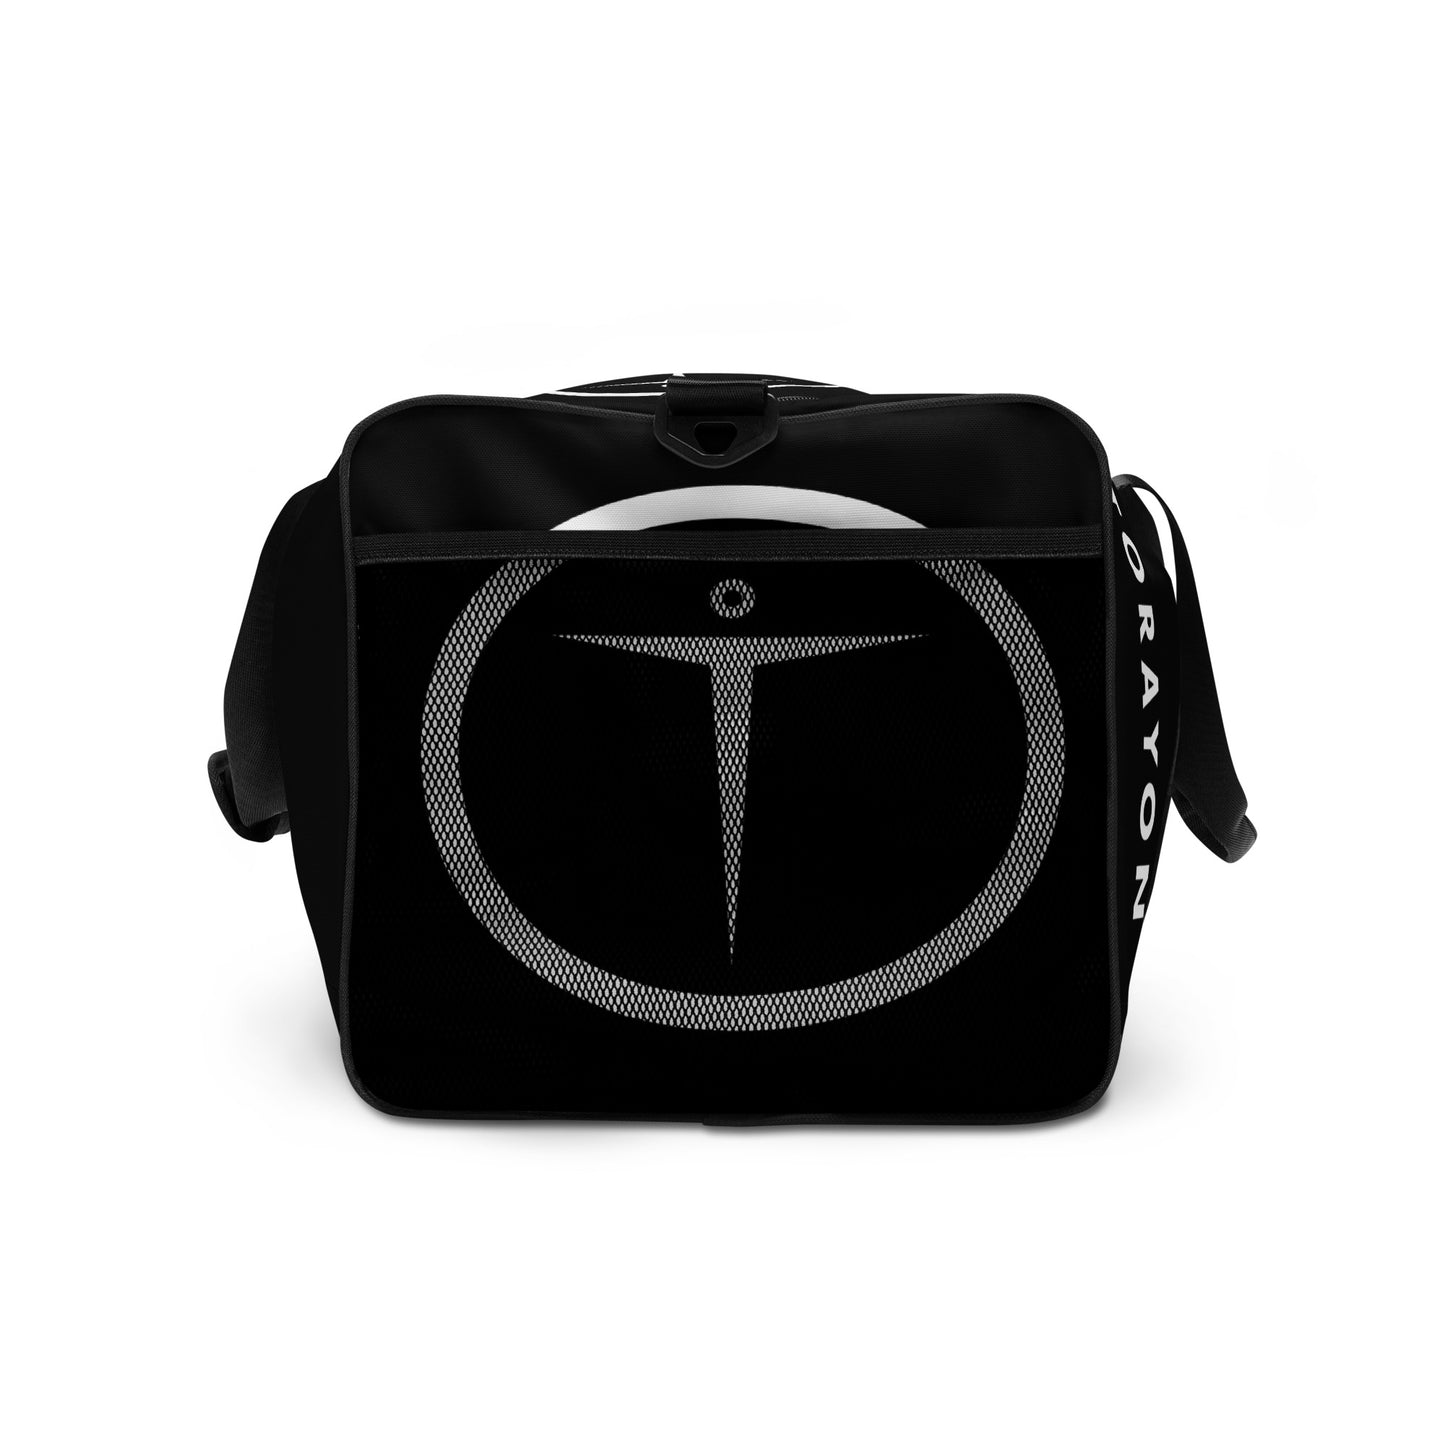 TORAYON Black Duffle bag